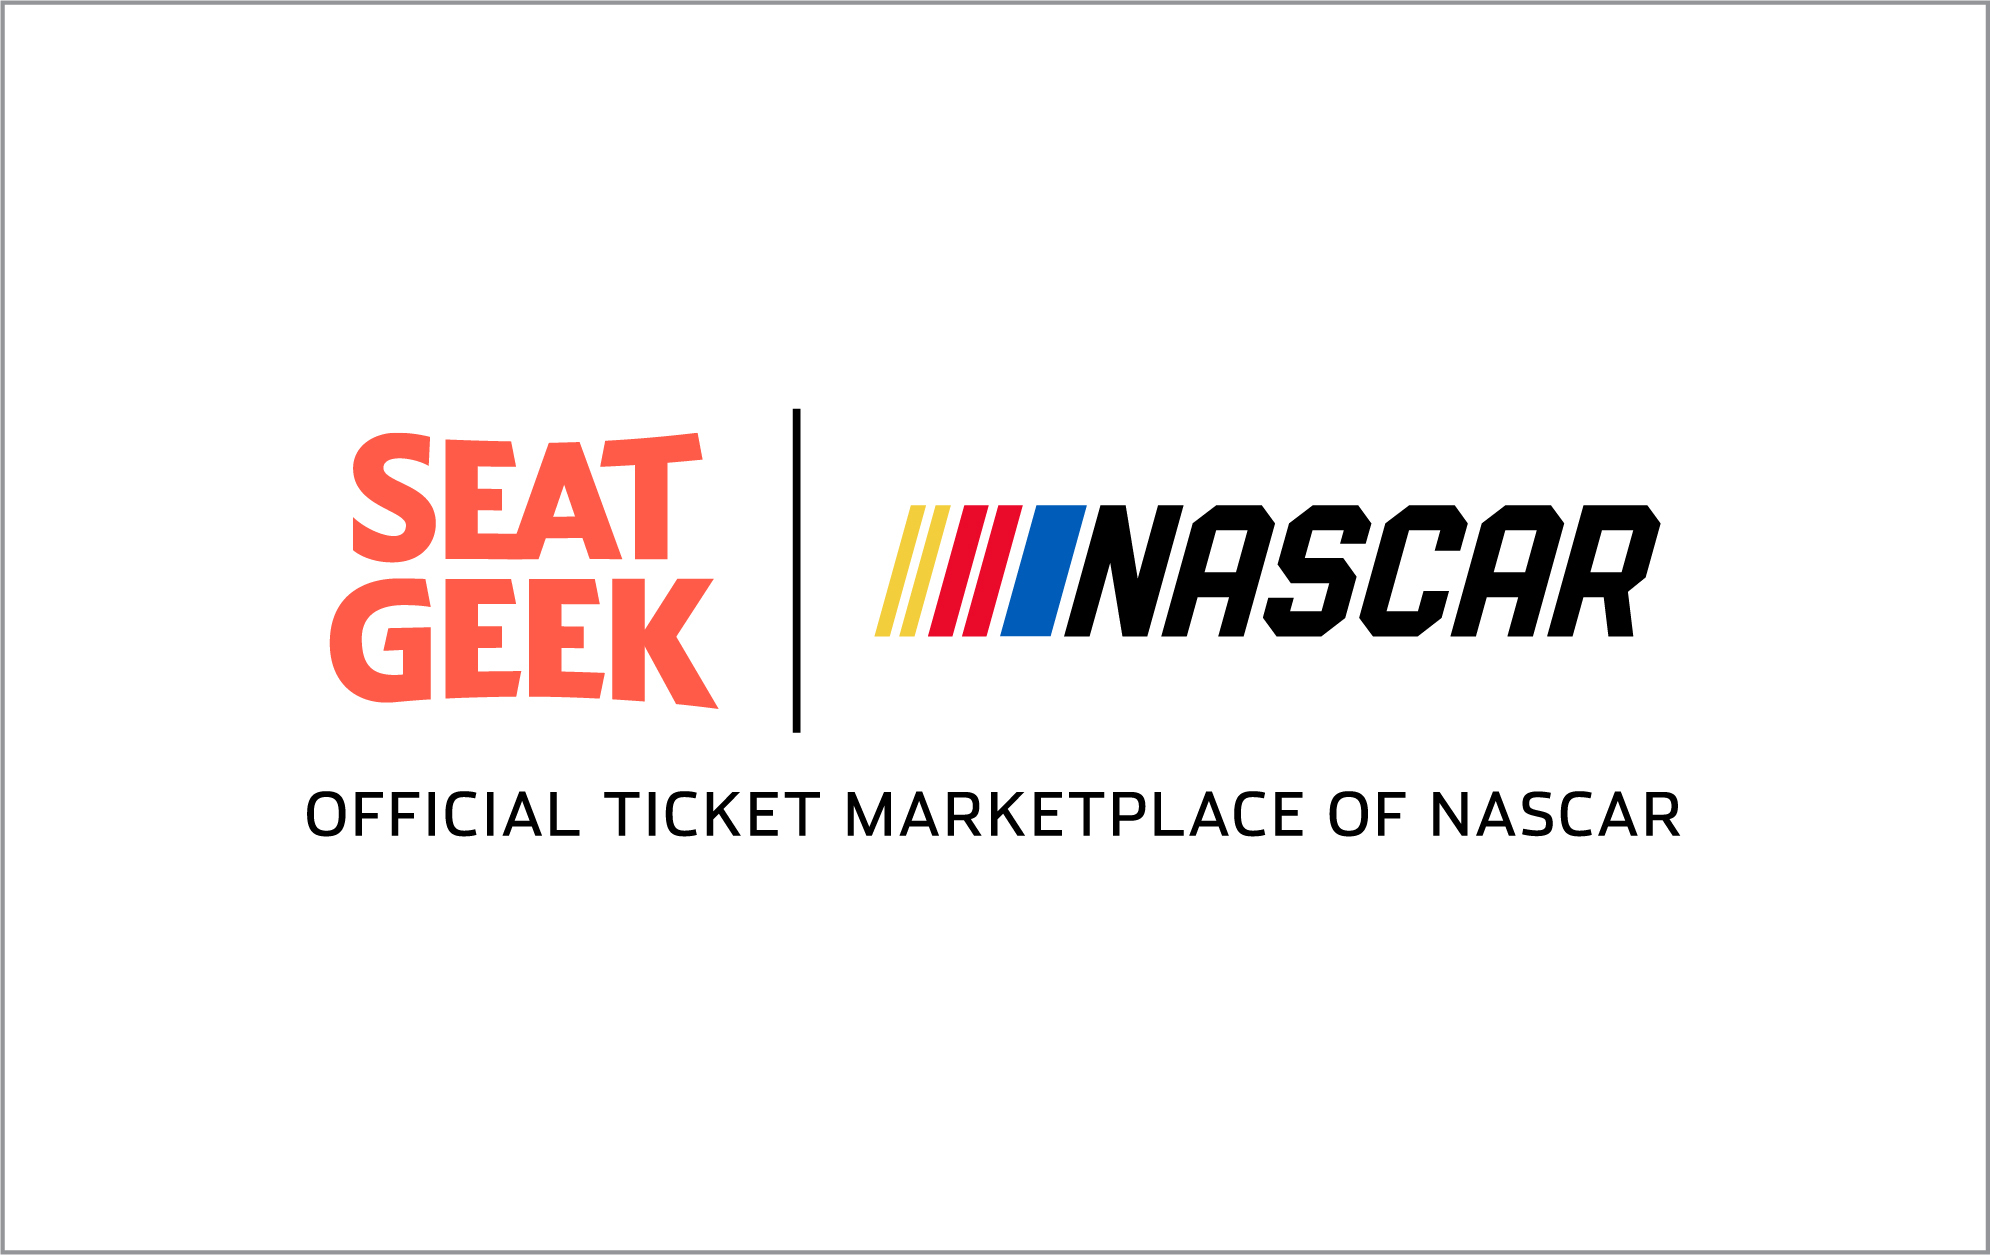 NASCAR and SeatGeek Enter MultiYear Official Partnership